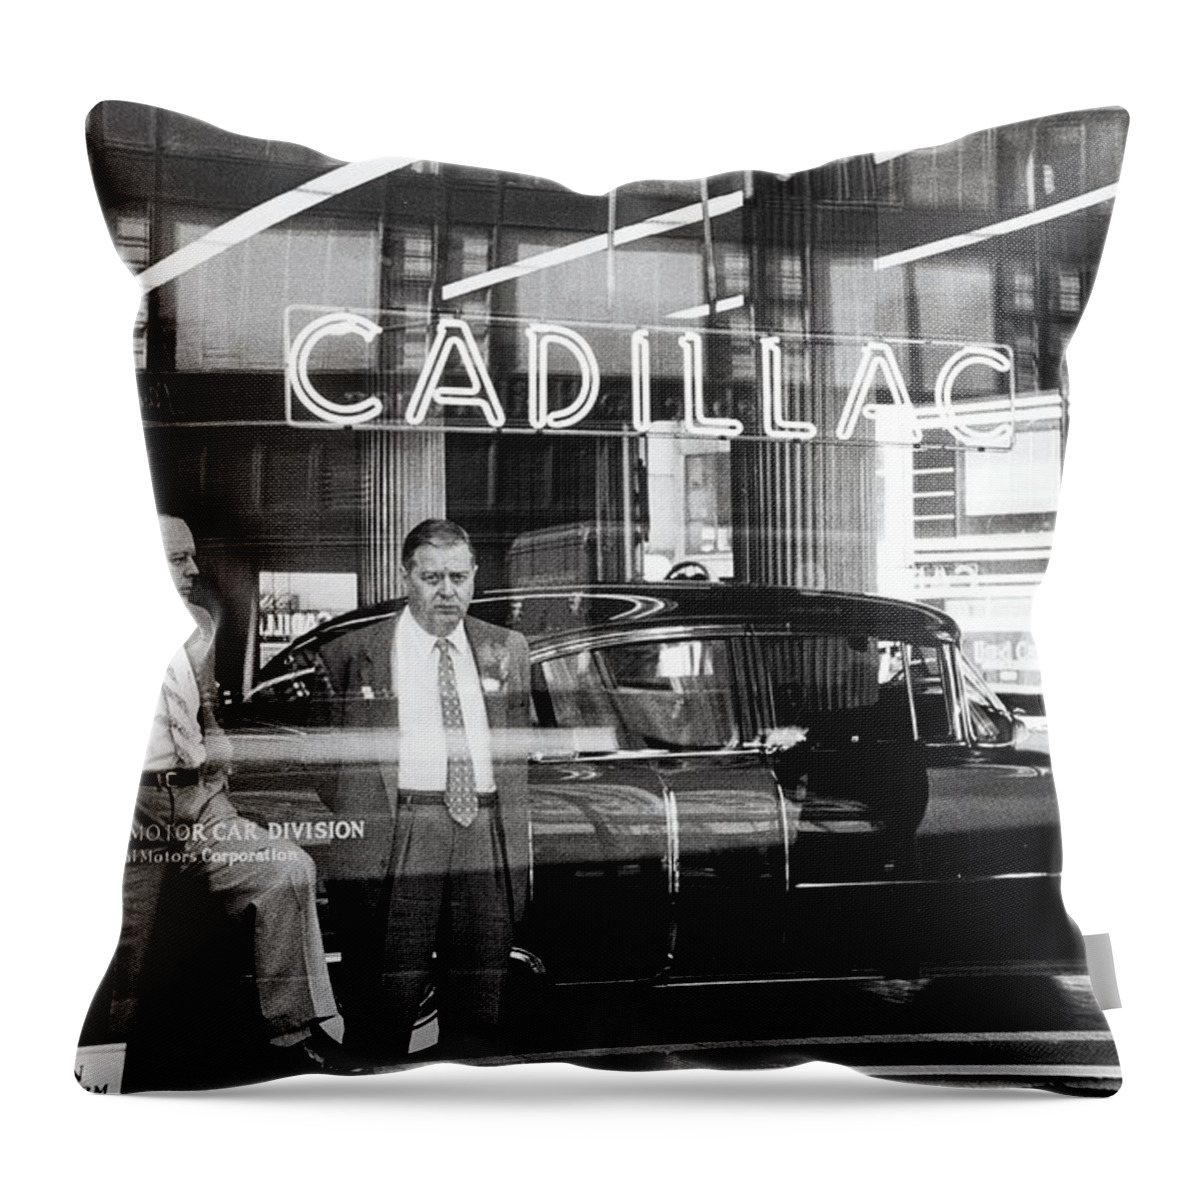 Americana Throw Pillow featuring the digital art Cadillac Dealership NYC 1955 by Kim Kent